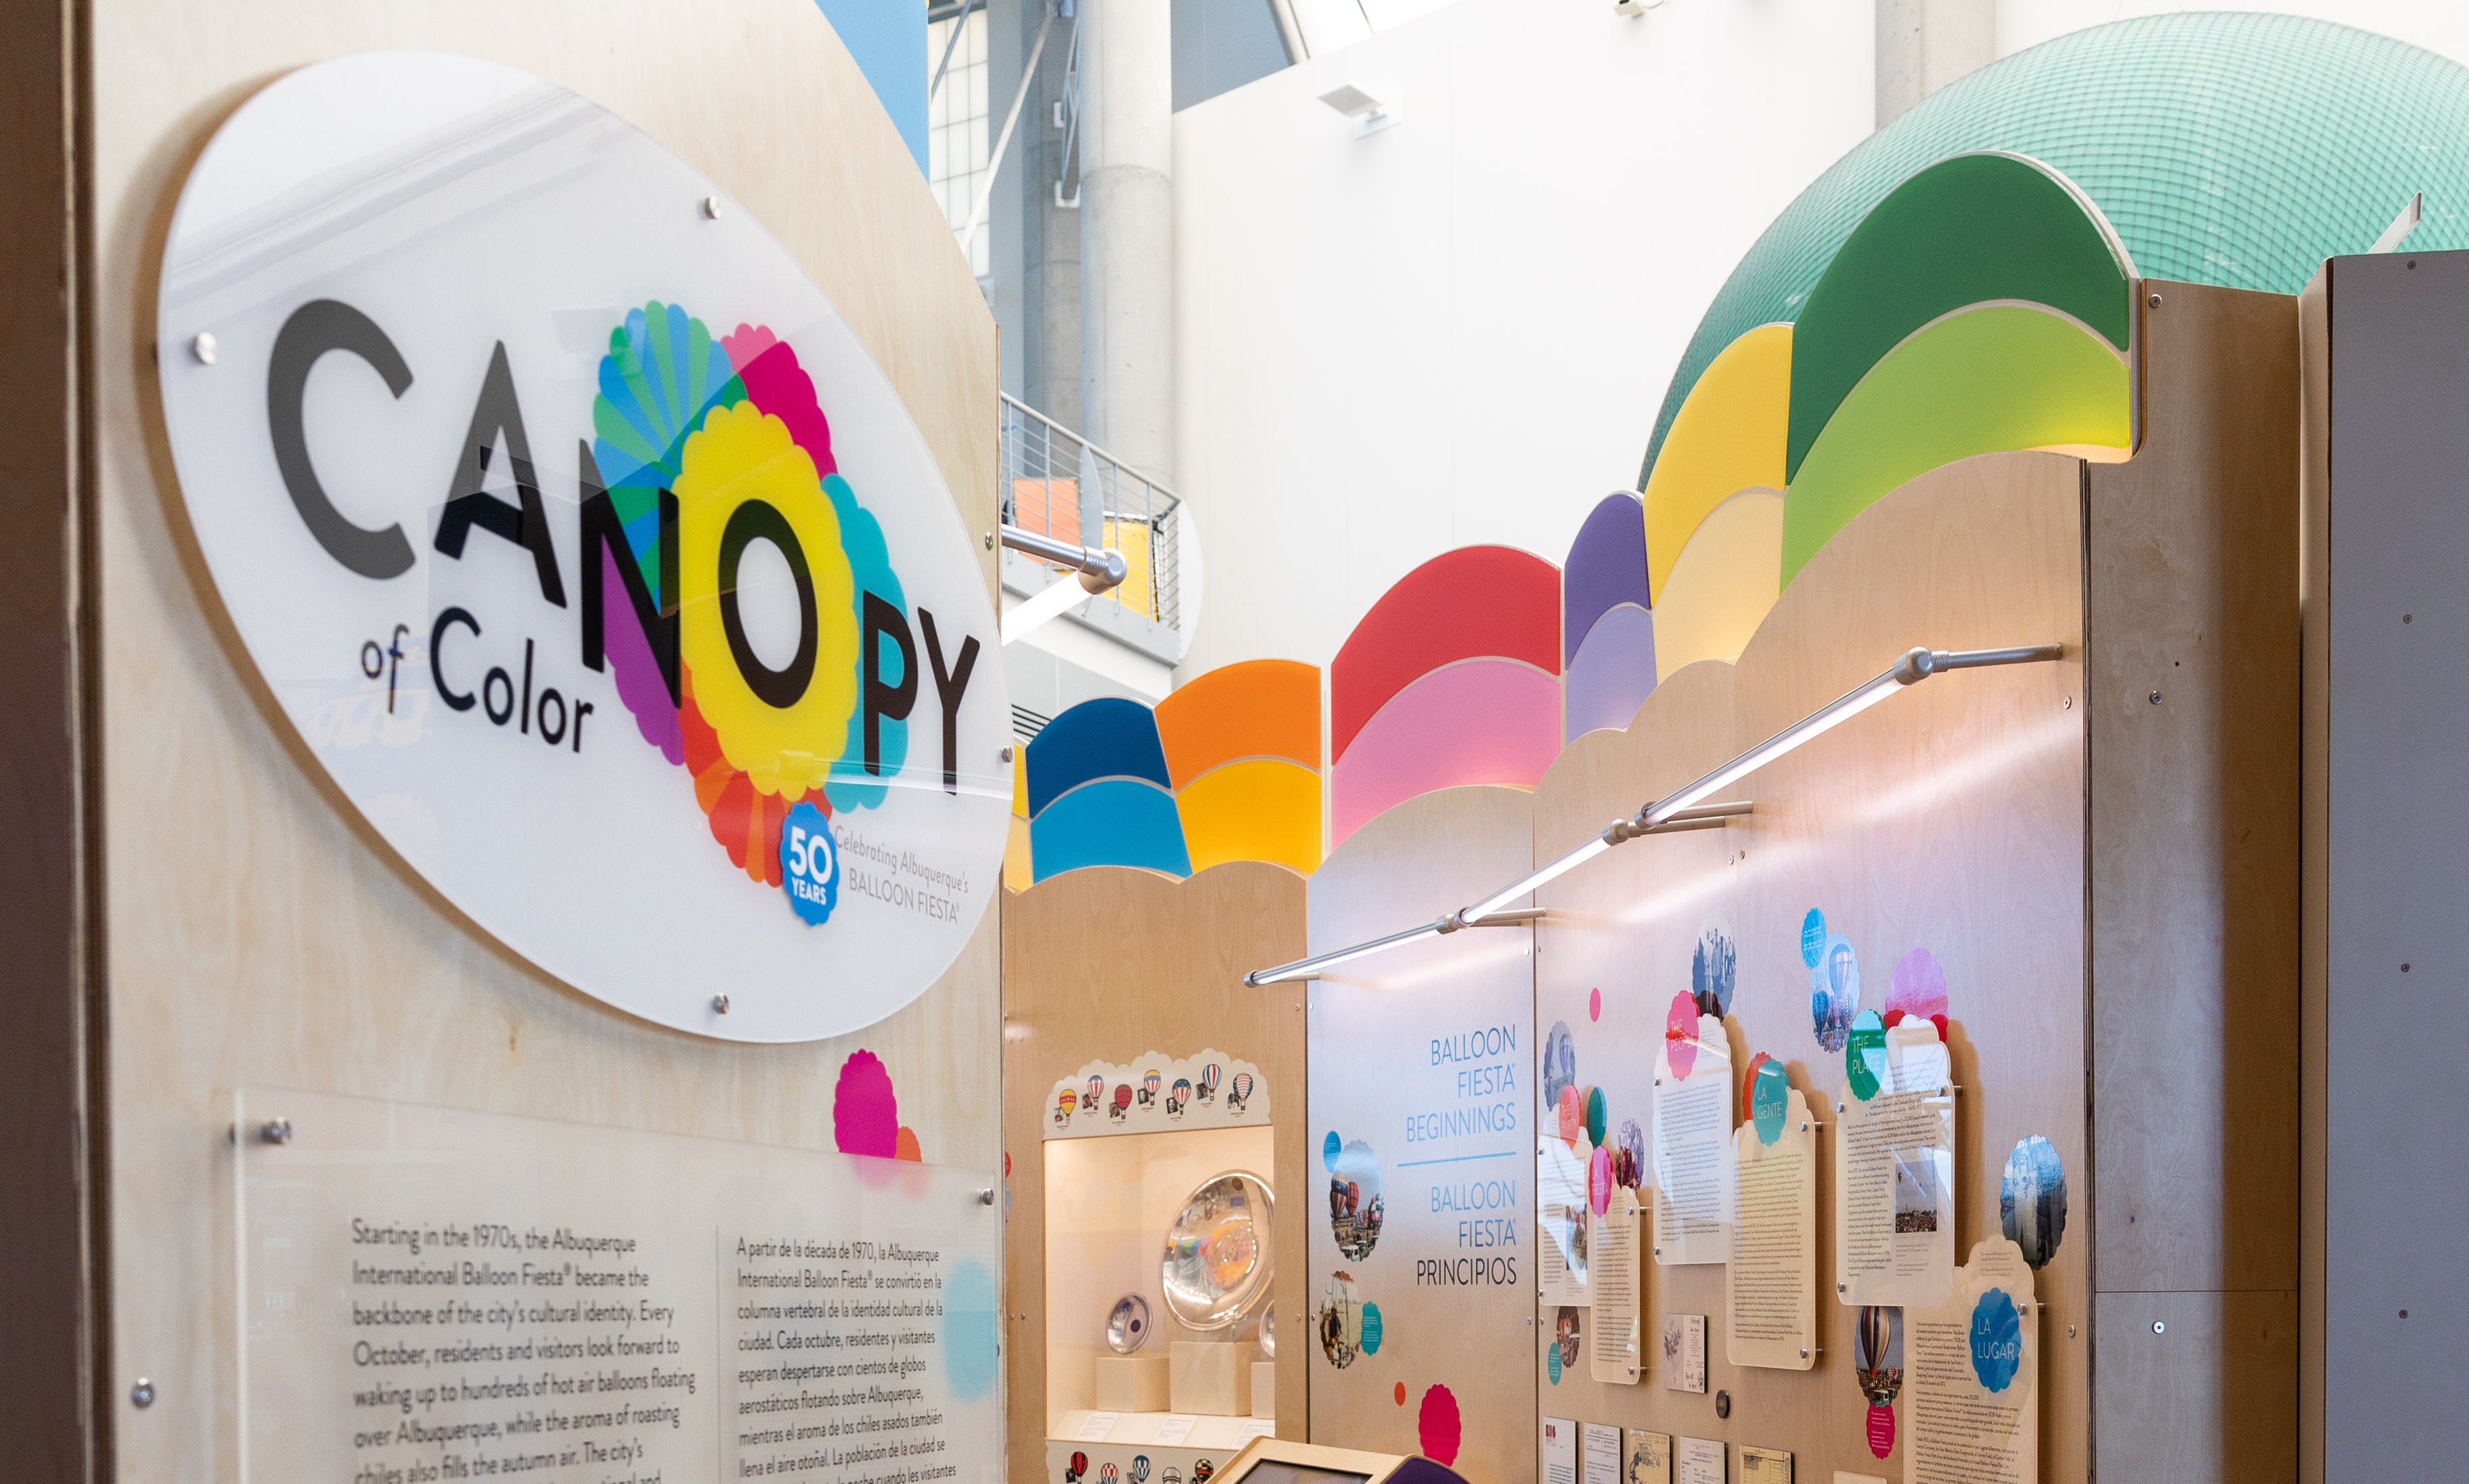 Canopy of Color Exhibit entrance